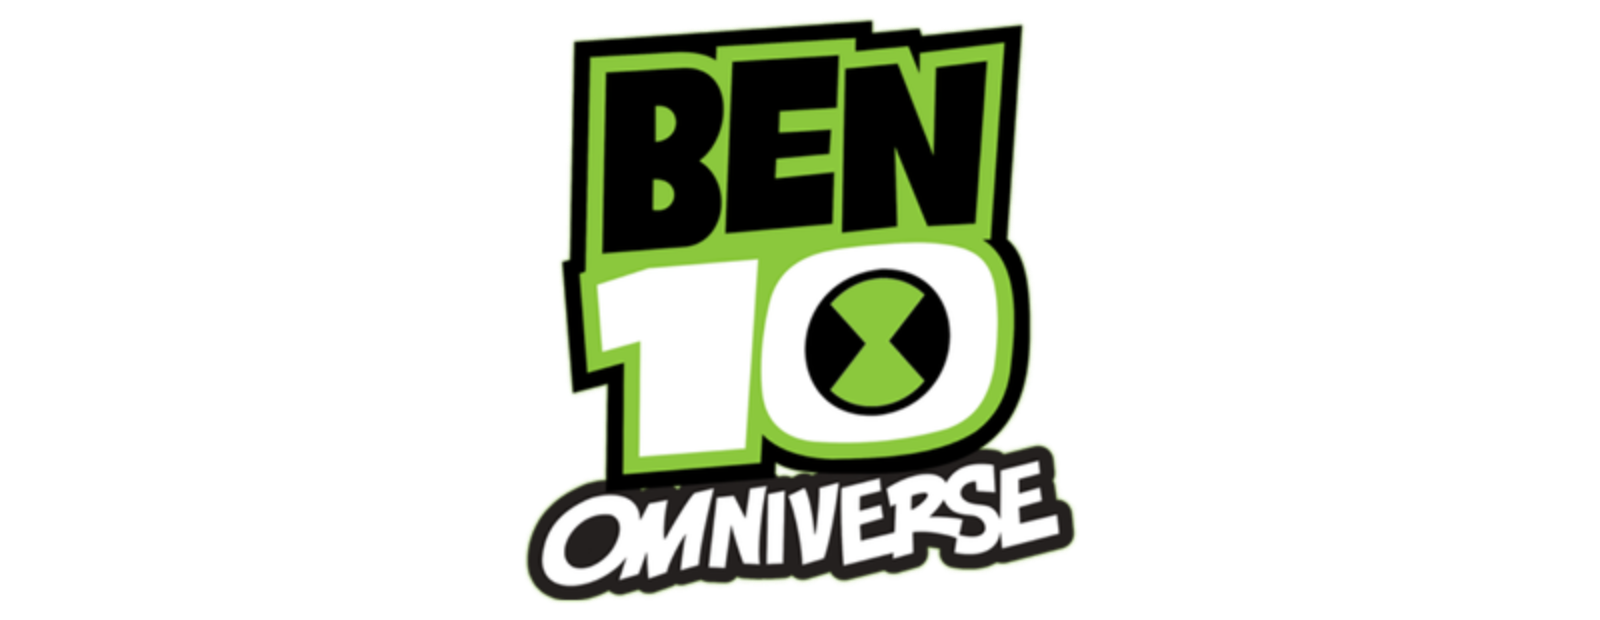 Ben 10: Omniverse (8 DVDs Box Set)